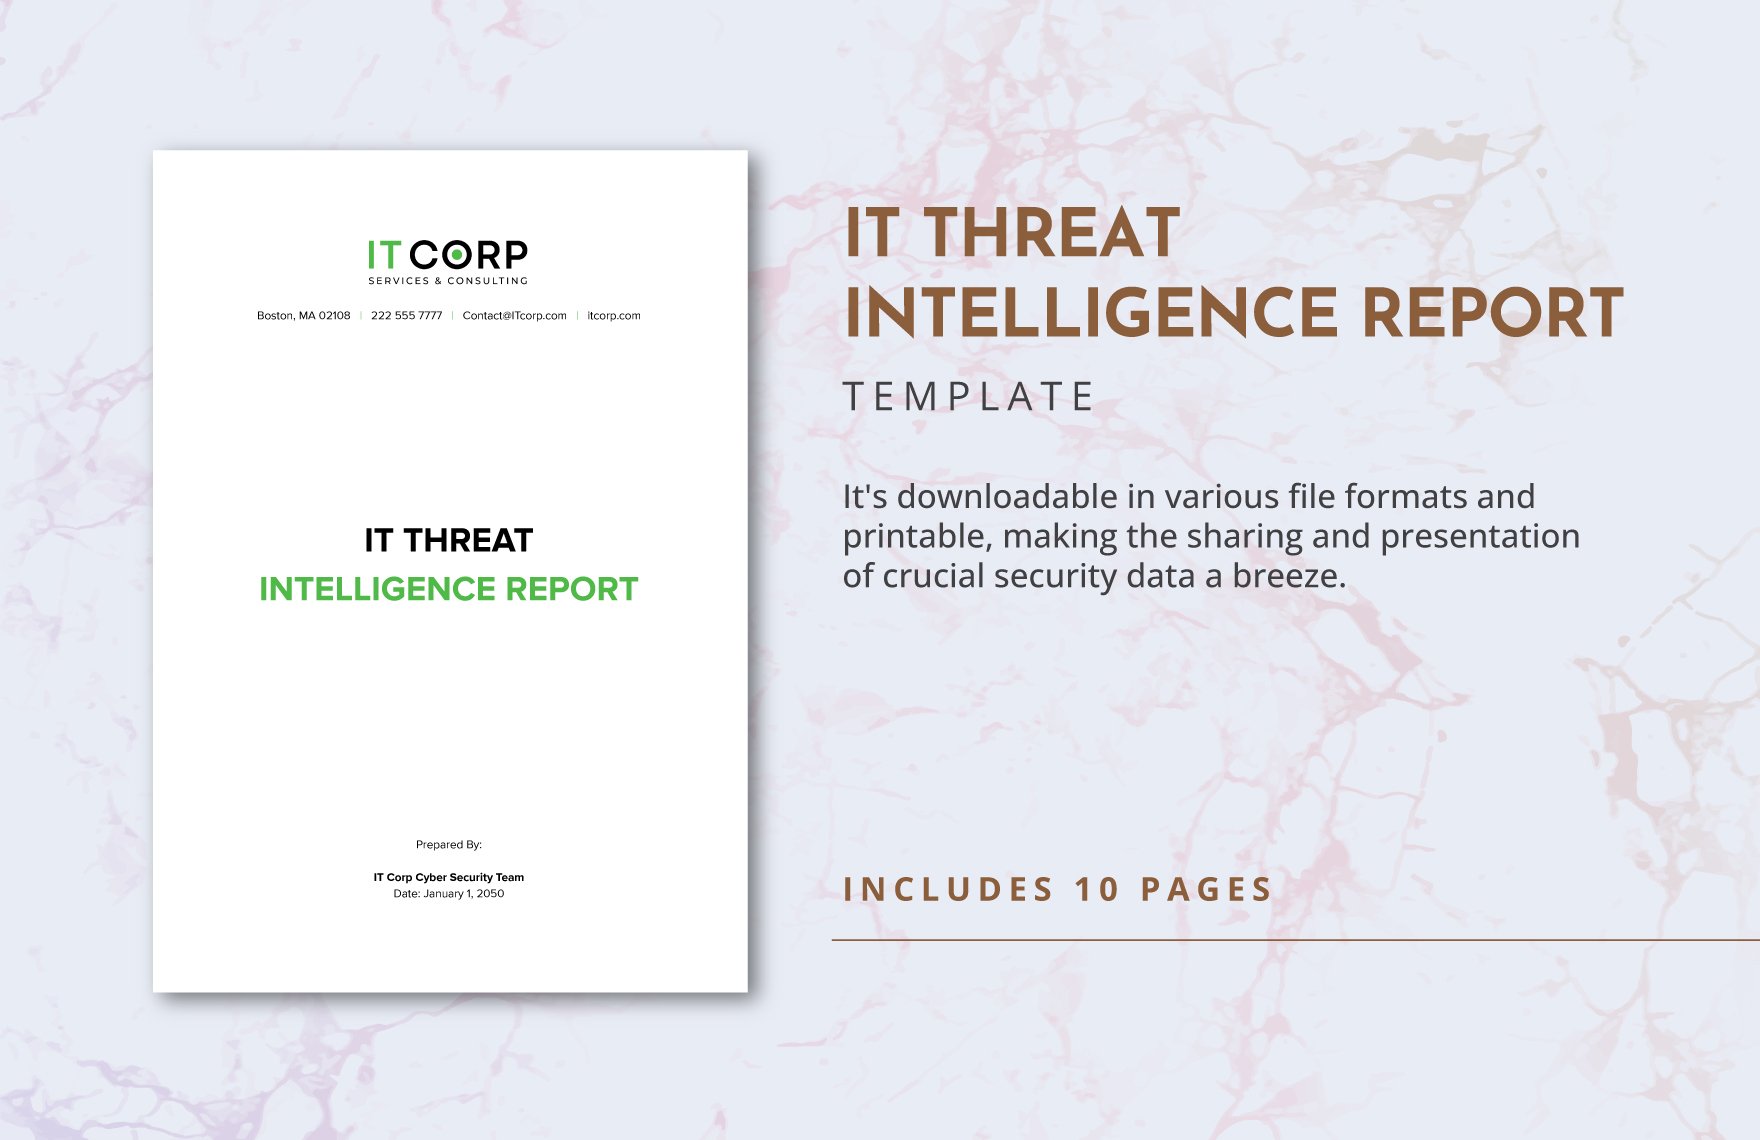 IT Threat Intelligence Report Template